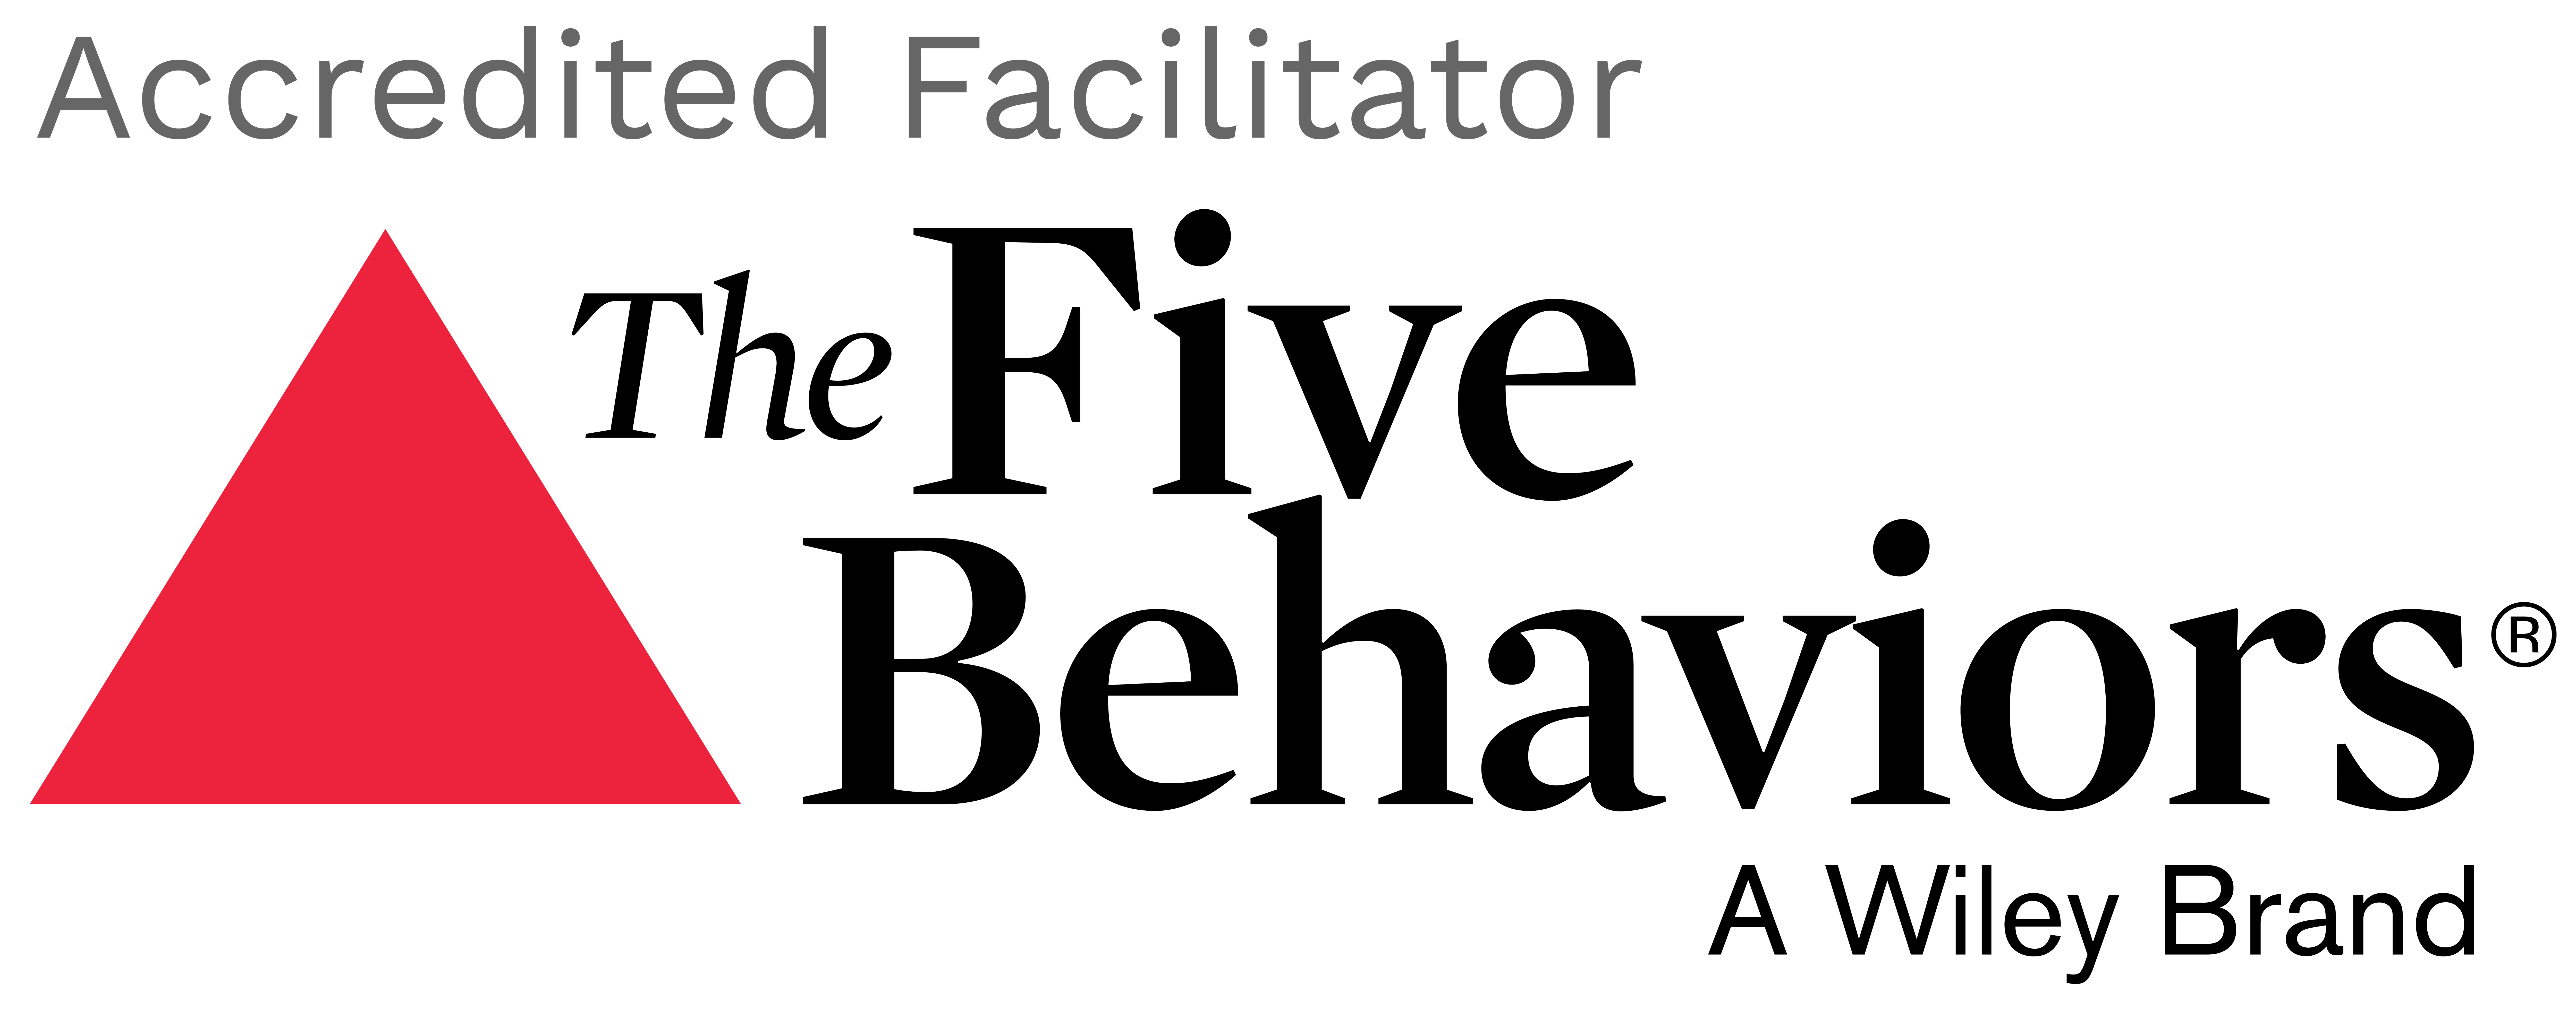 Accredited Facilitator